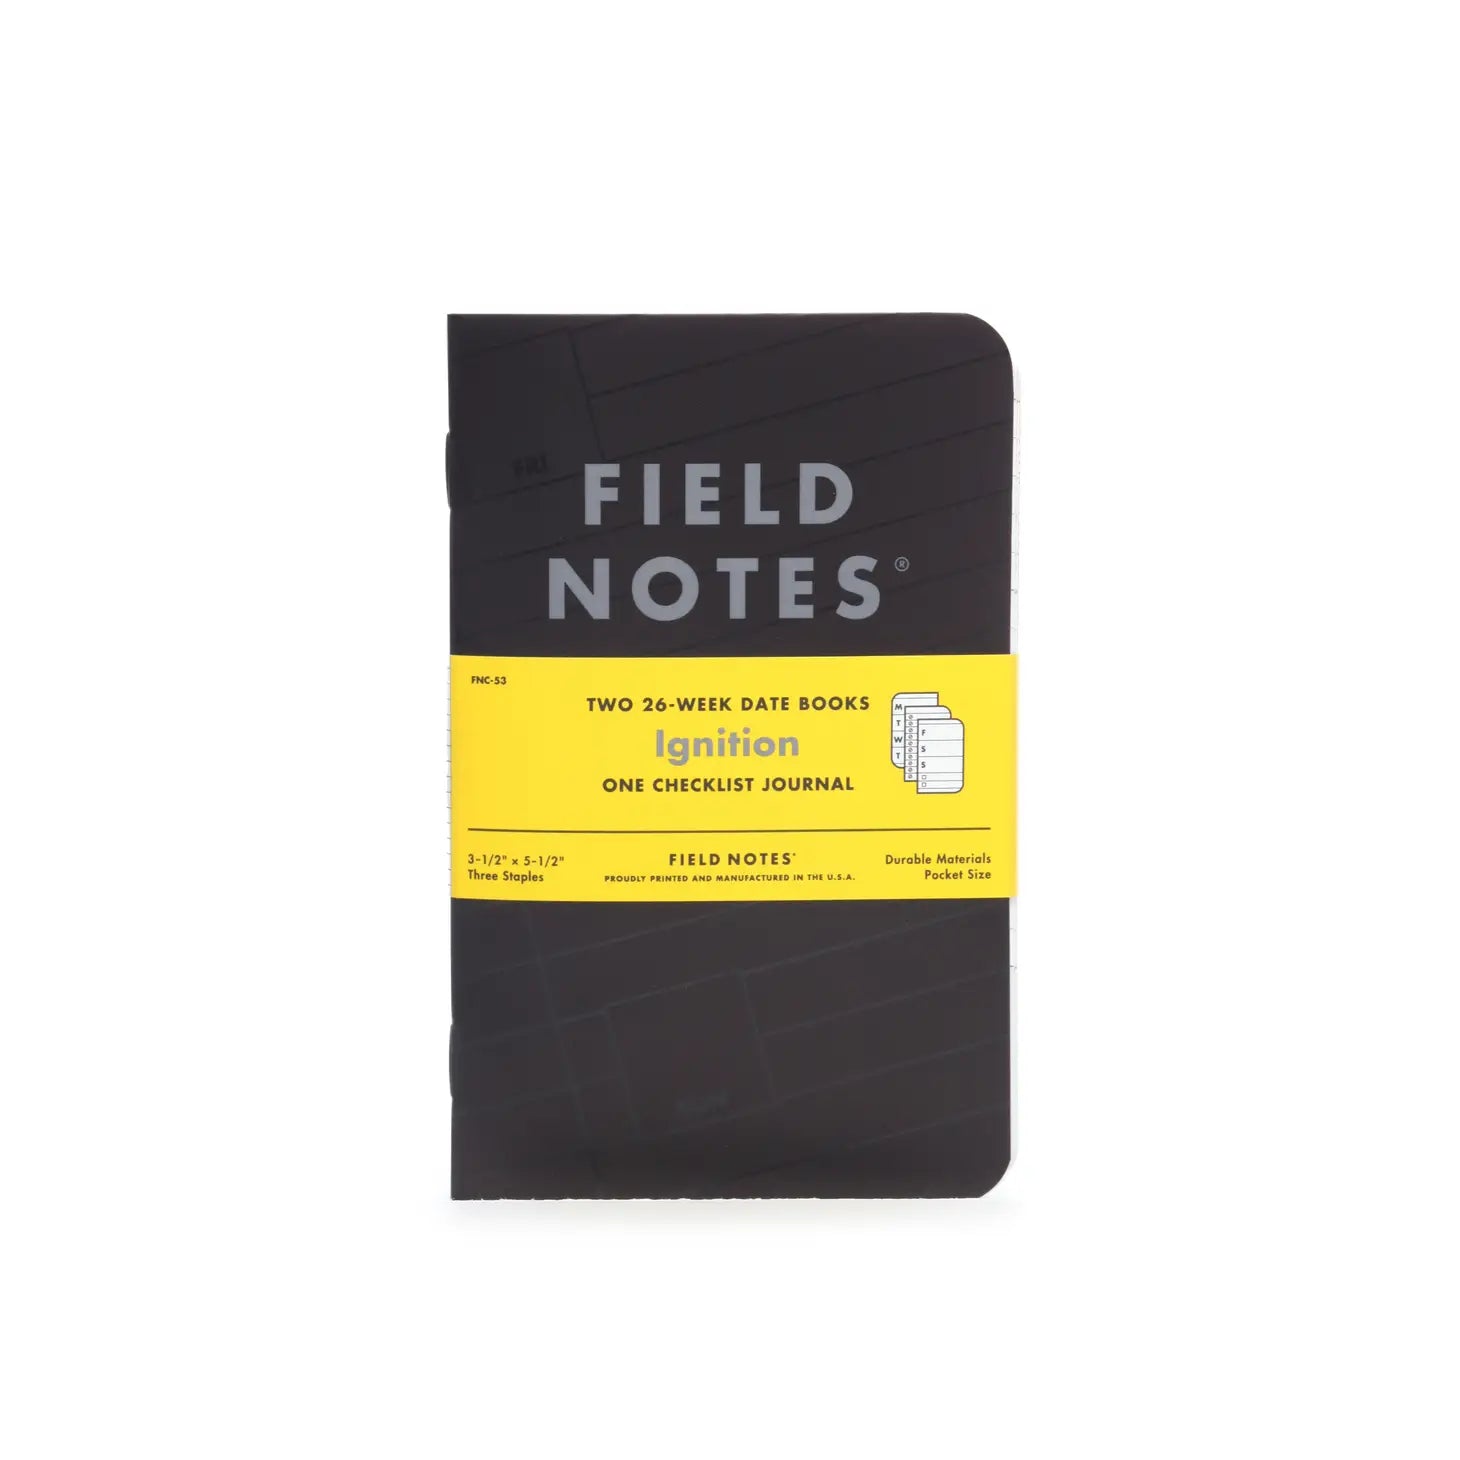 Field Notes Pocket Notebook Set - Ignition Trilogy